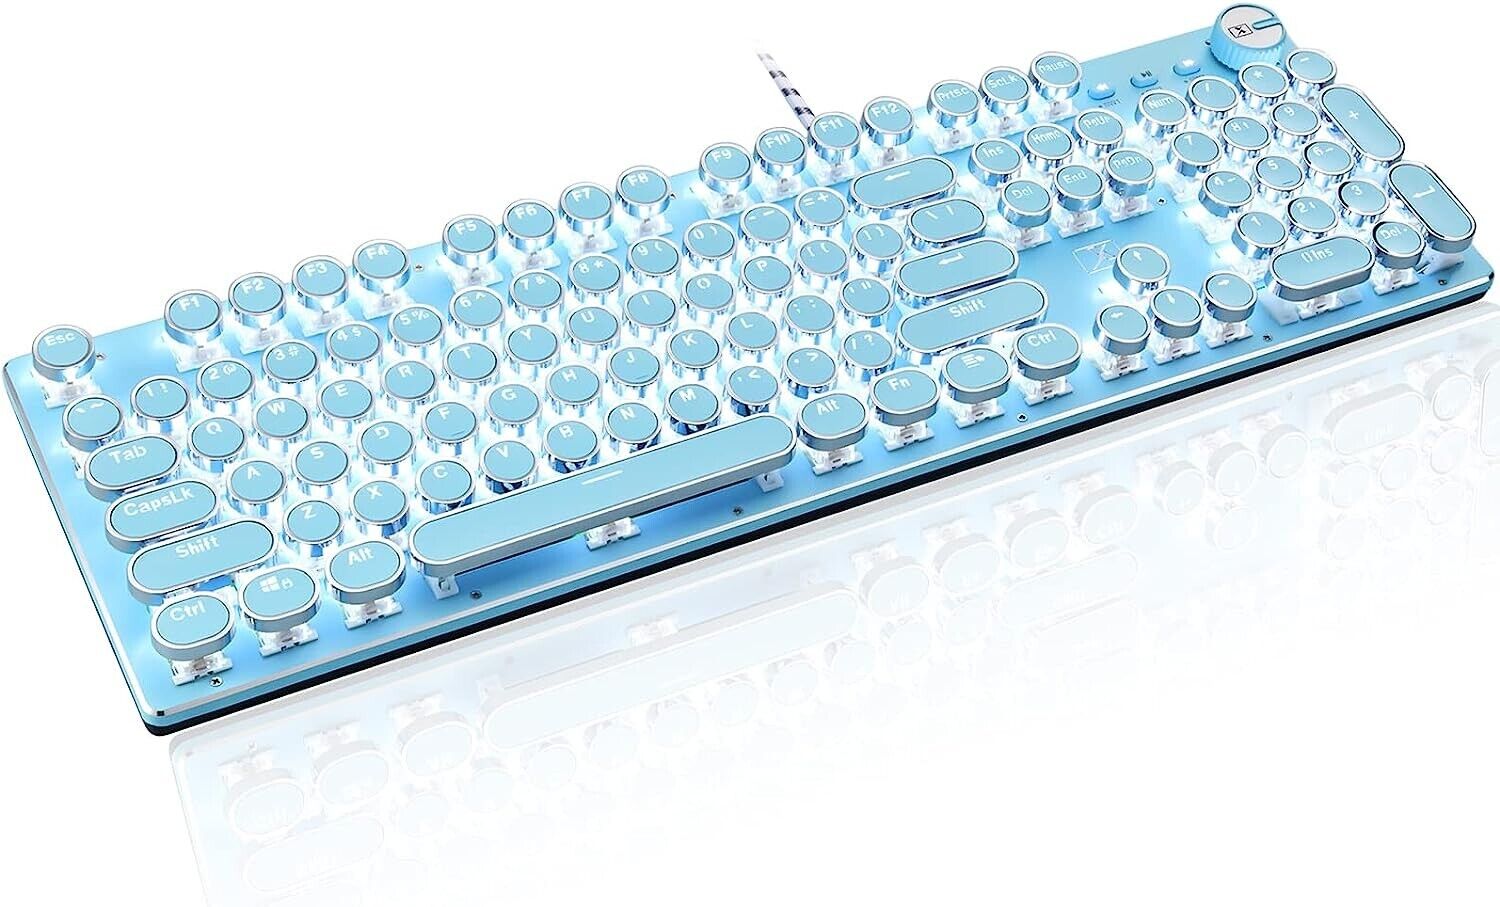 Basaltech X9-Series Blue Full Sized 104-Key Round Keycaps Mechanical Keyboard